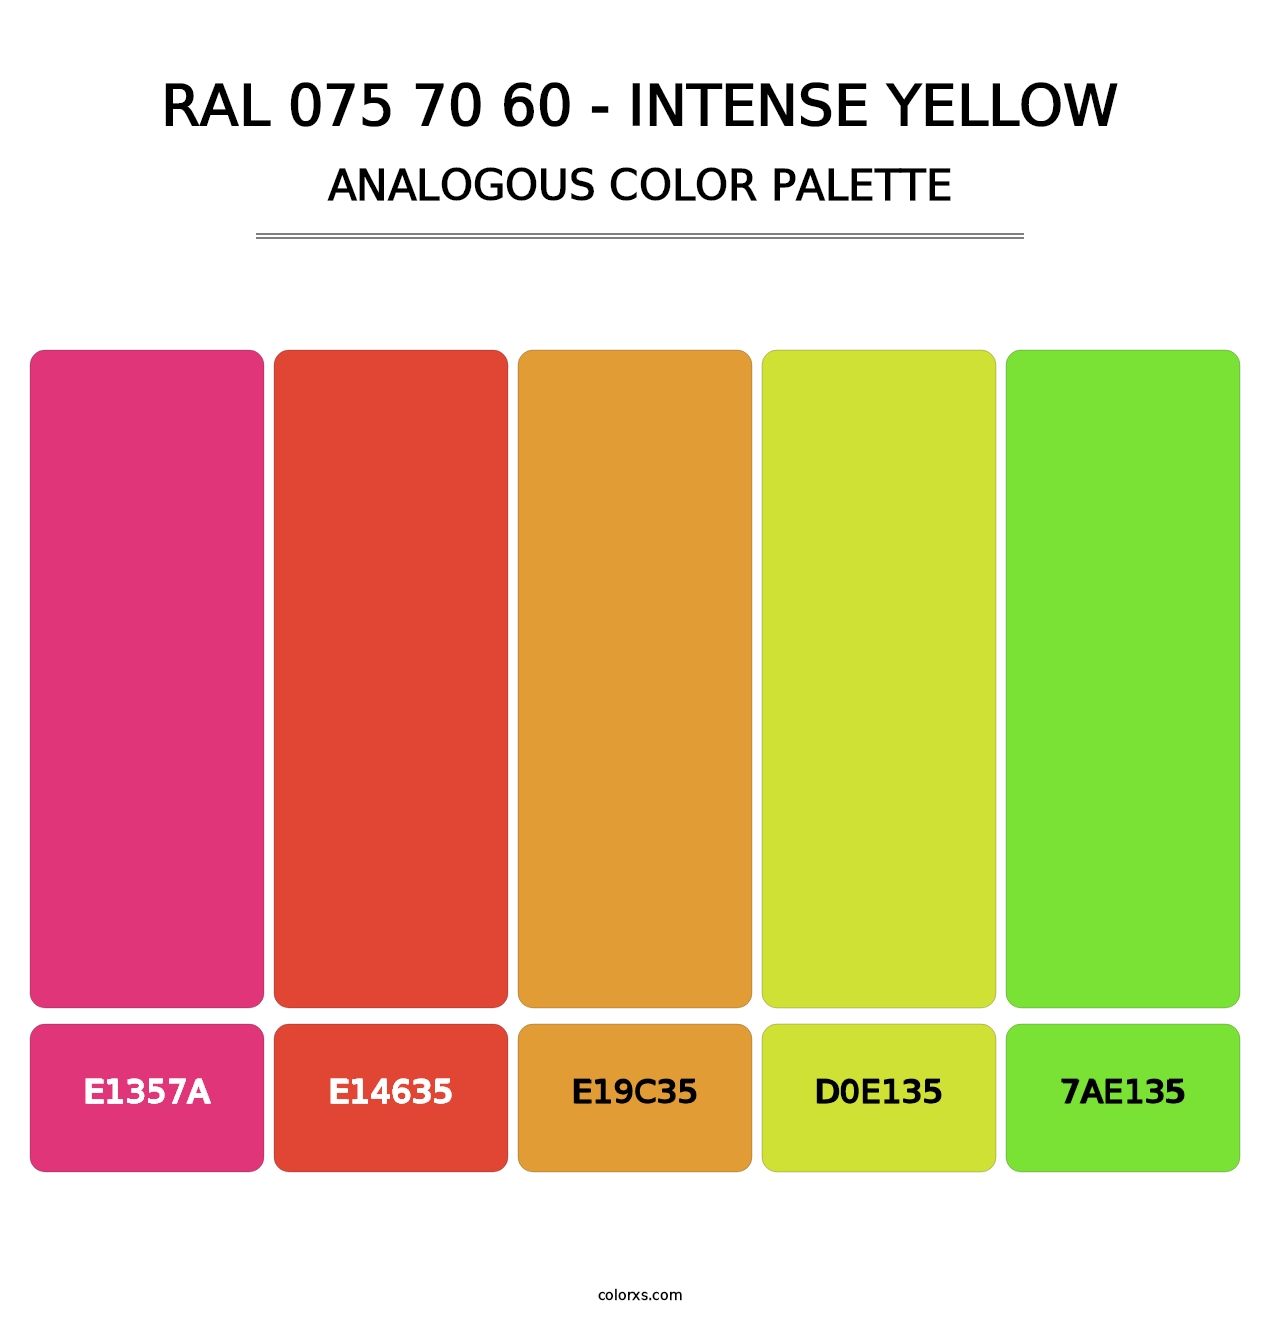 RAL 075 70 60 - Intense Yellow - Analogous Color Palette